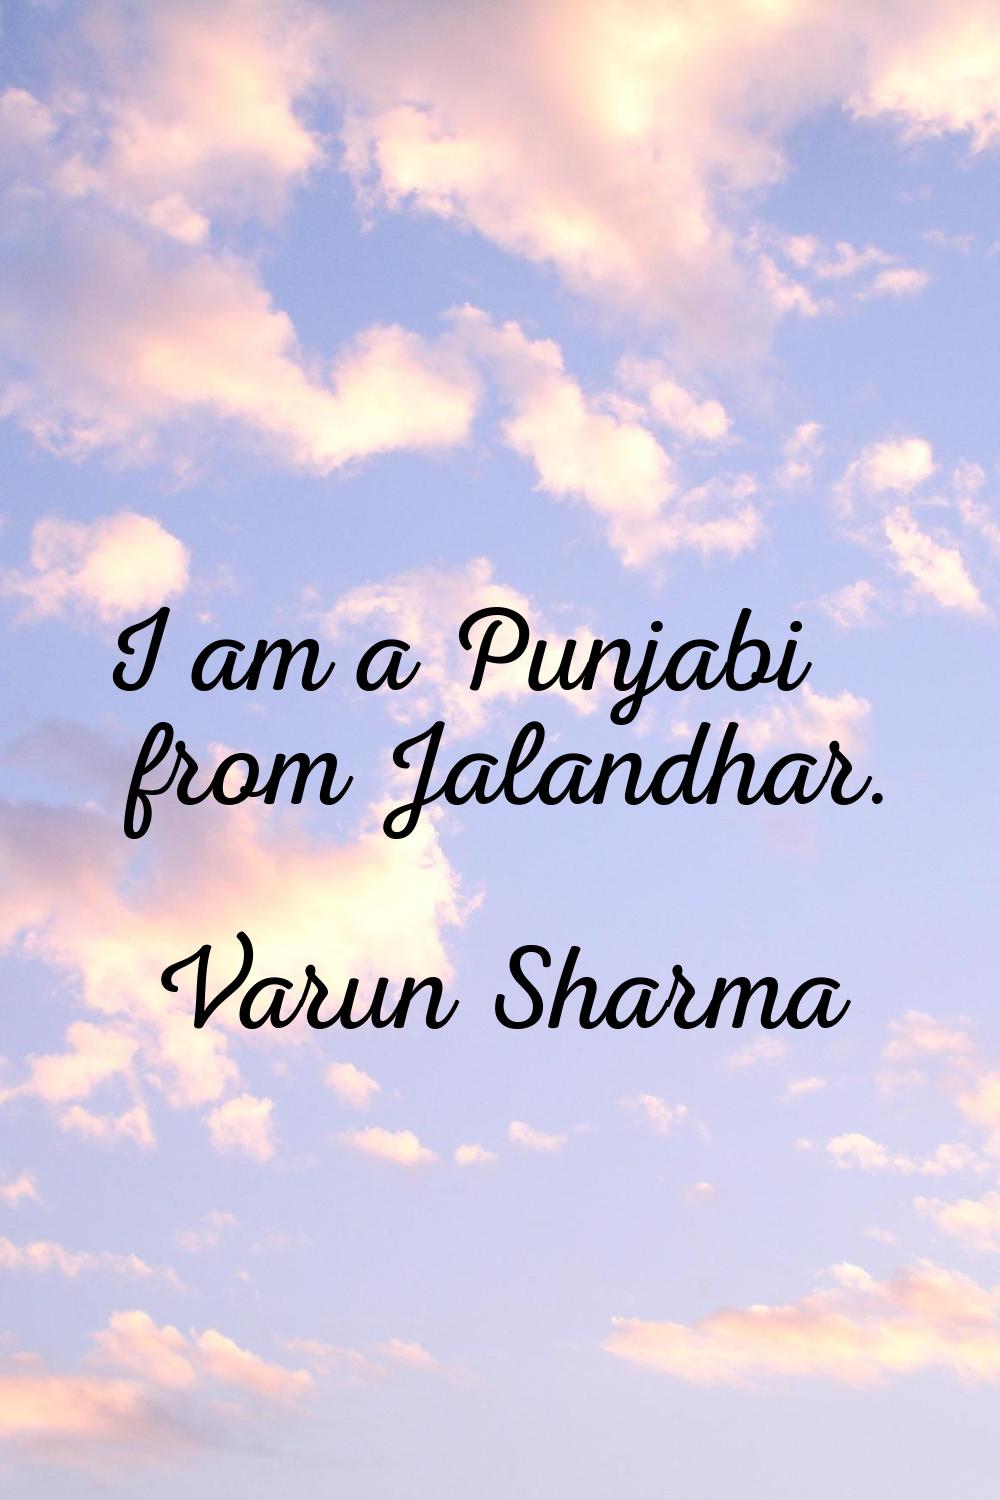 I am a Punjabi from Jalandhar.